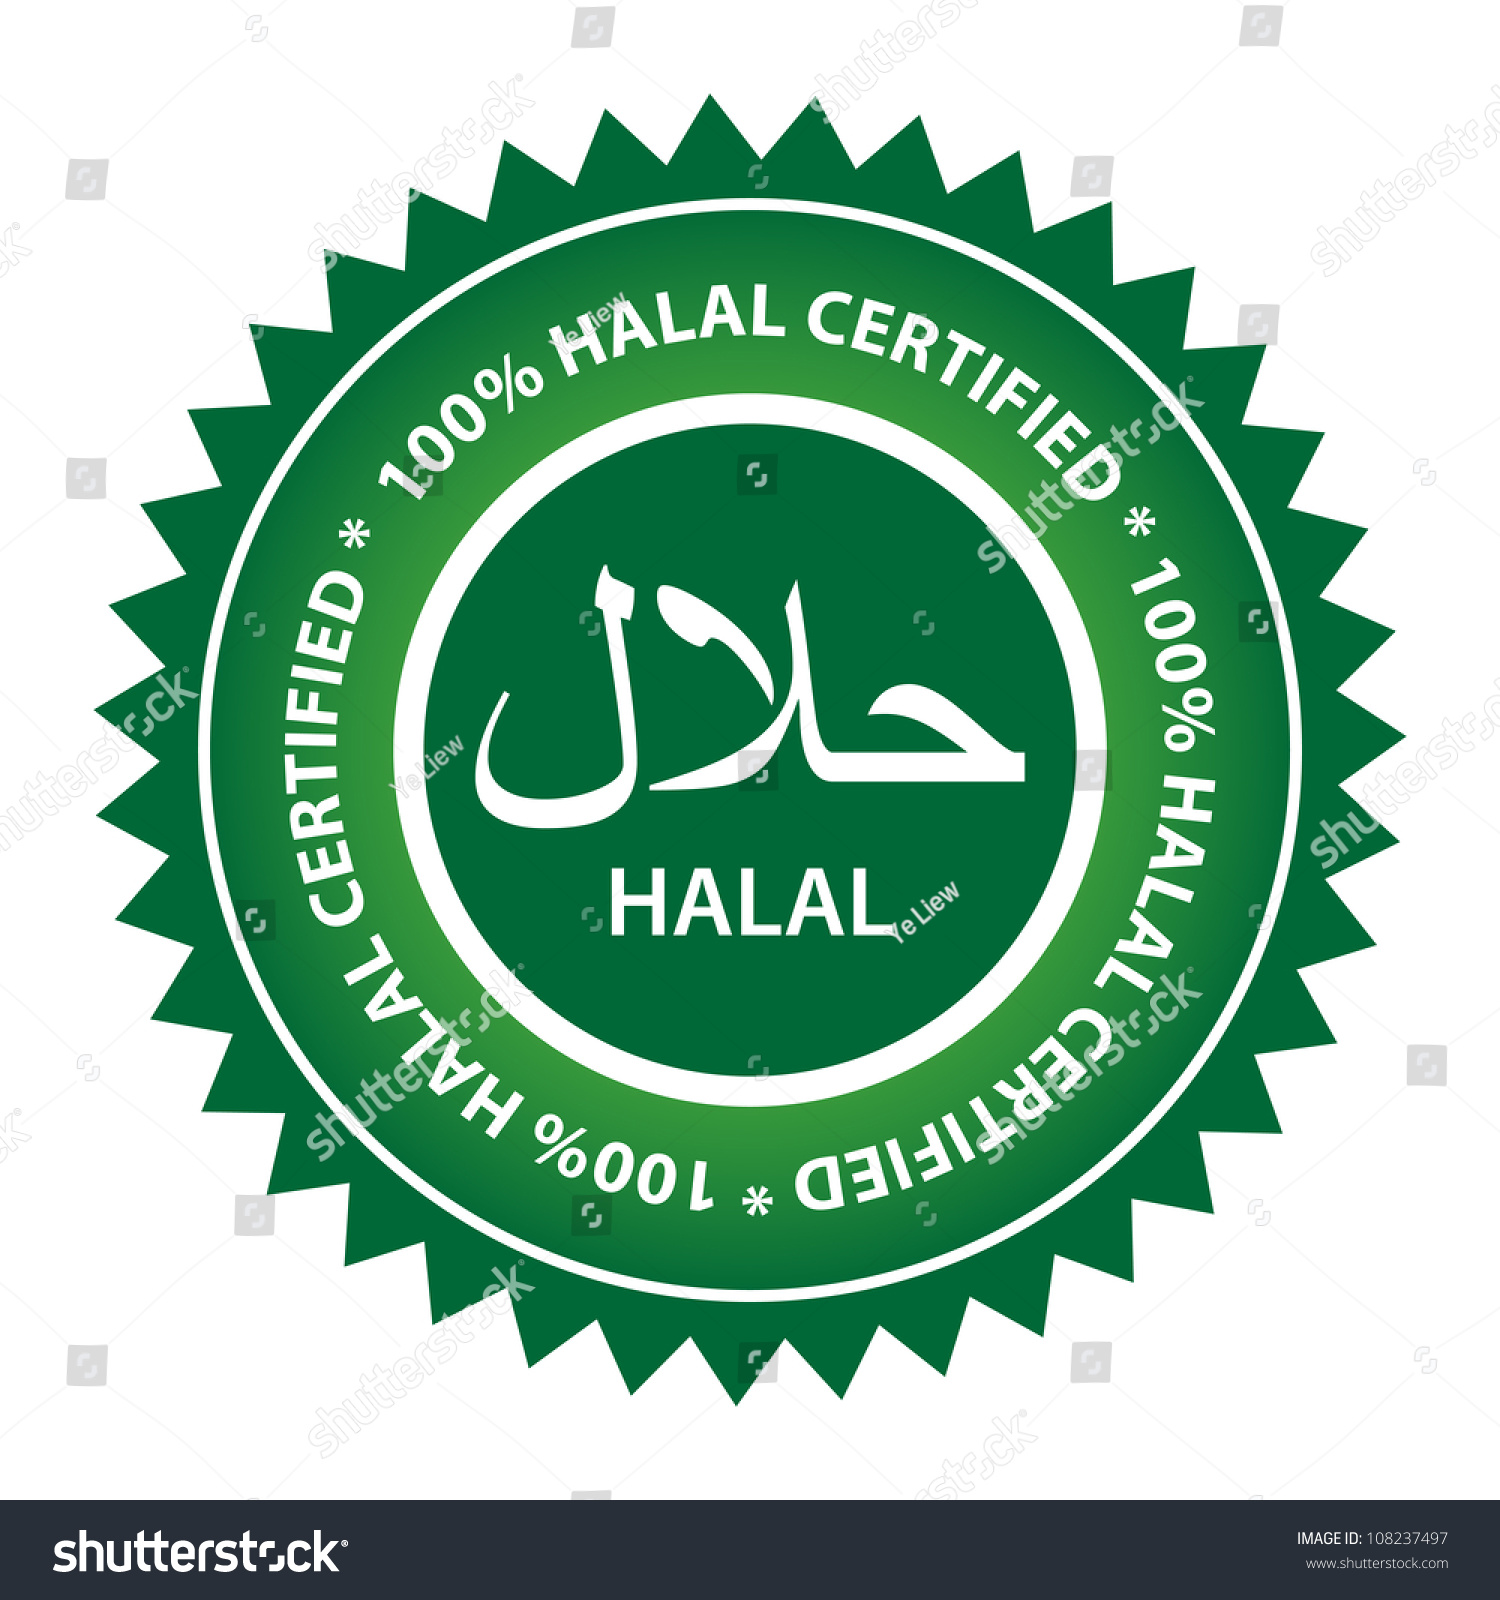 Is trading binary options halal